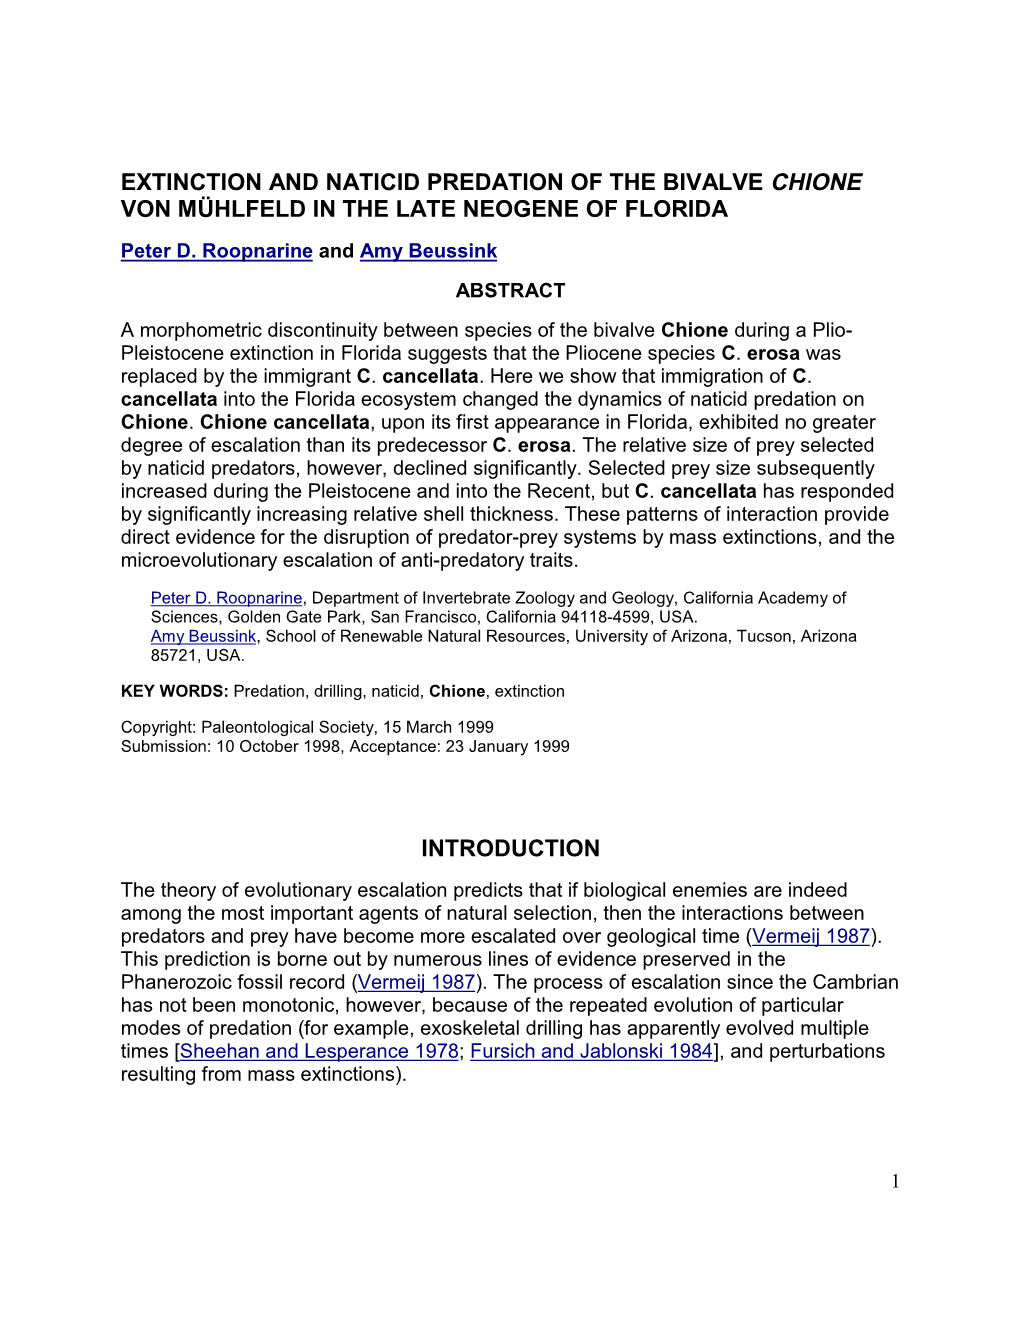 EXTINCTION and NATICID PREDATION of the BIVALVE CHIONE VON MÜHLFELD in the LATE NEOGENE of FLORIDA Peter D